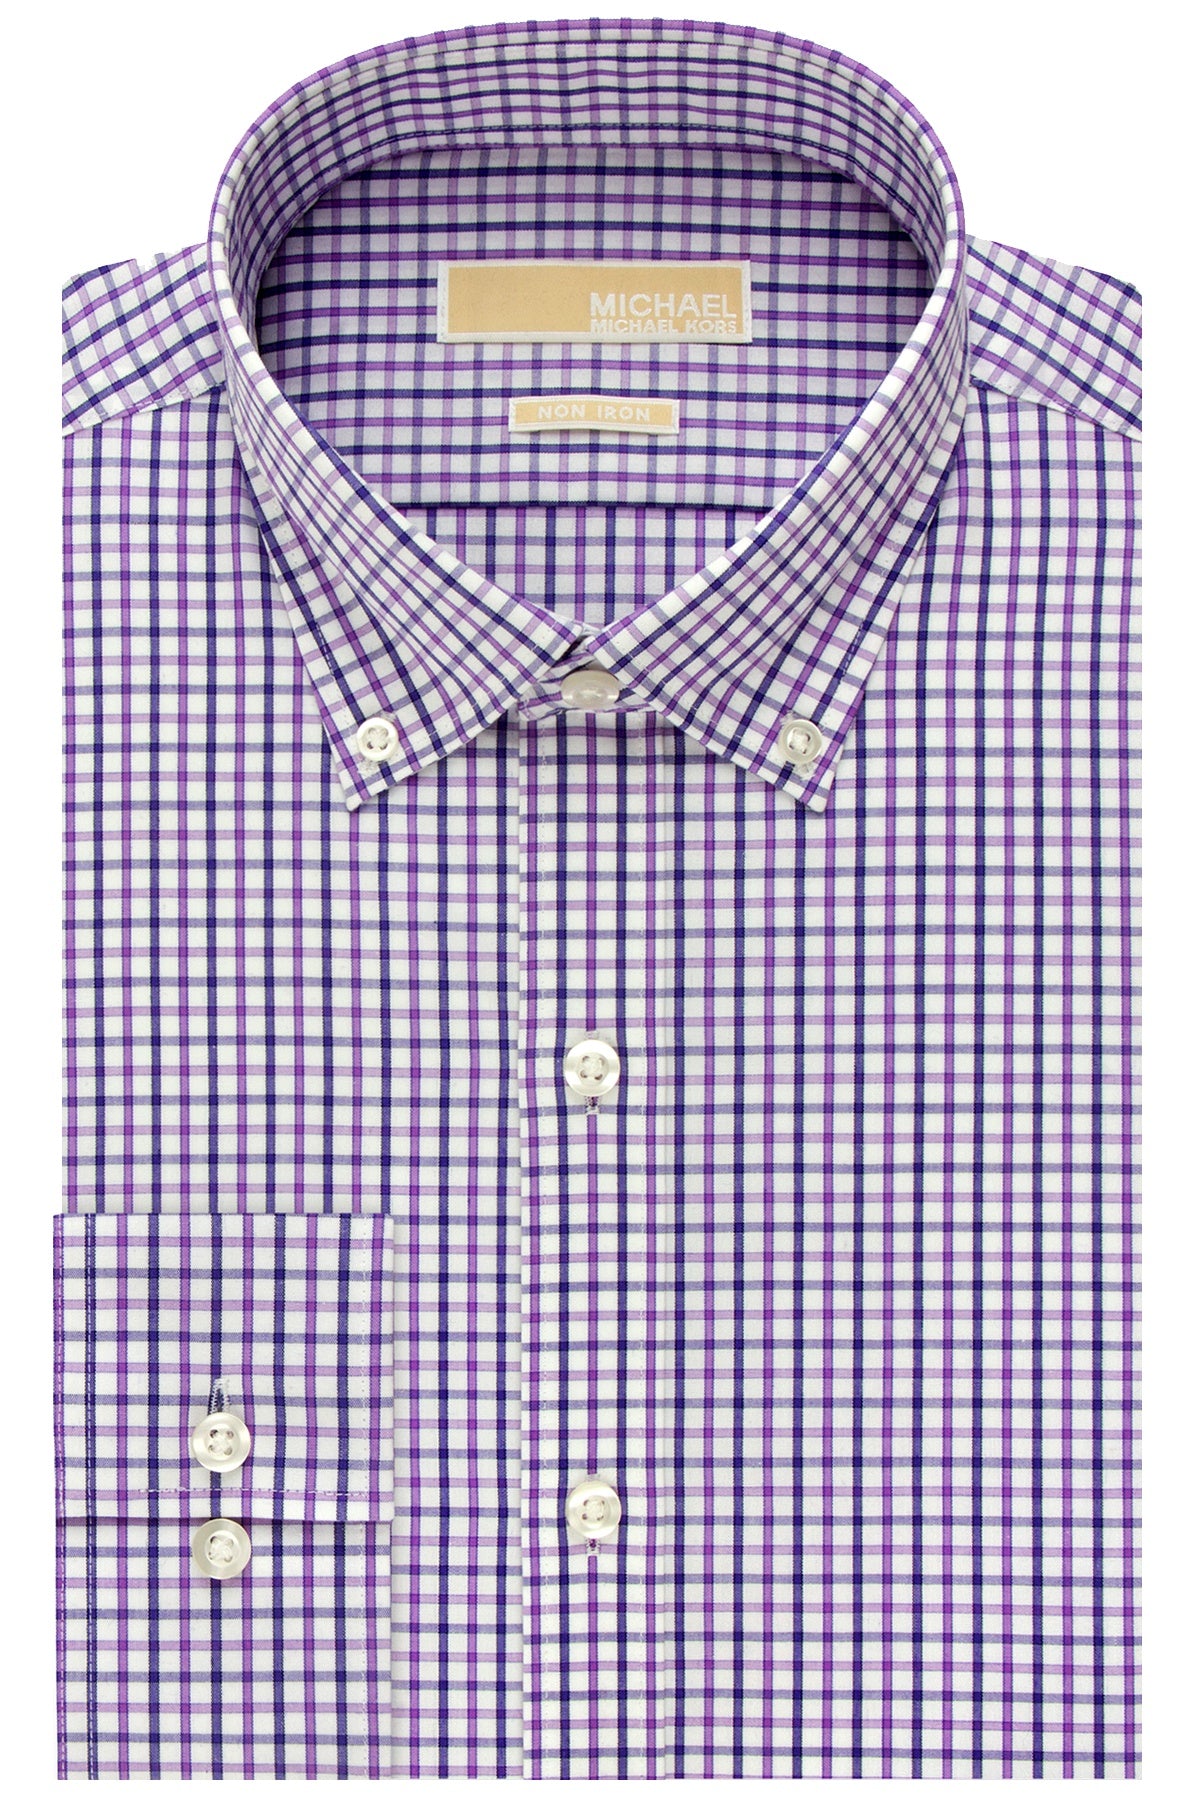 MICHAEL Michael Kors Helio Purple Check Non-Iron Dress Shirt